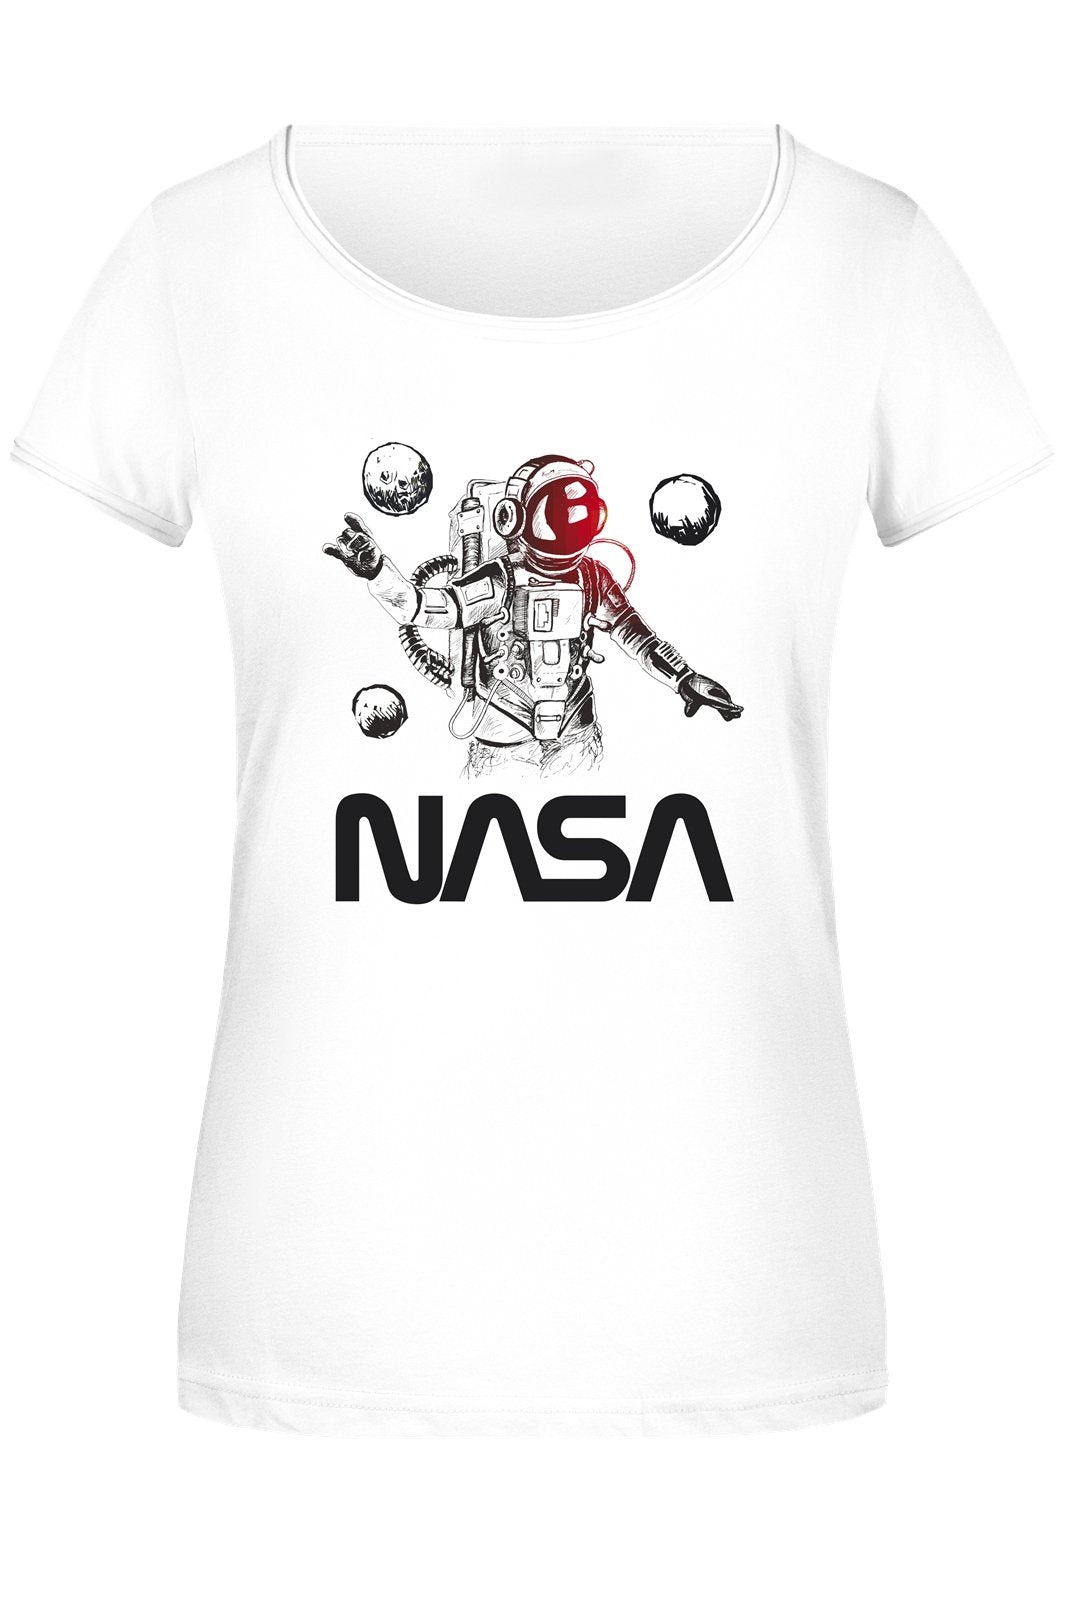 Bild: T-Shirt Damen - NASA Astronaut (Planeten) Geschenkidee